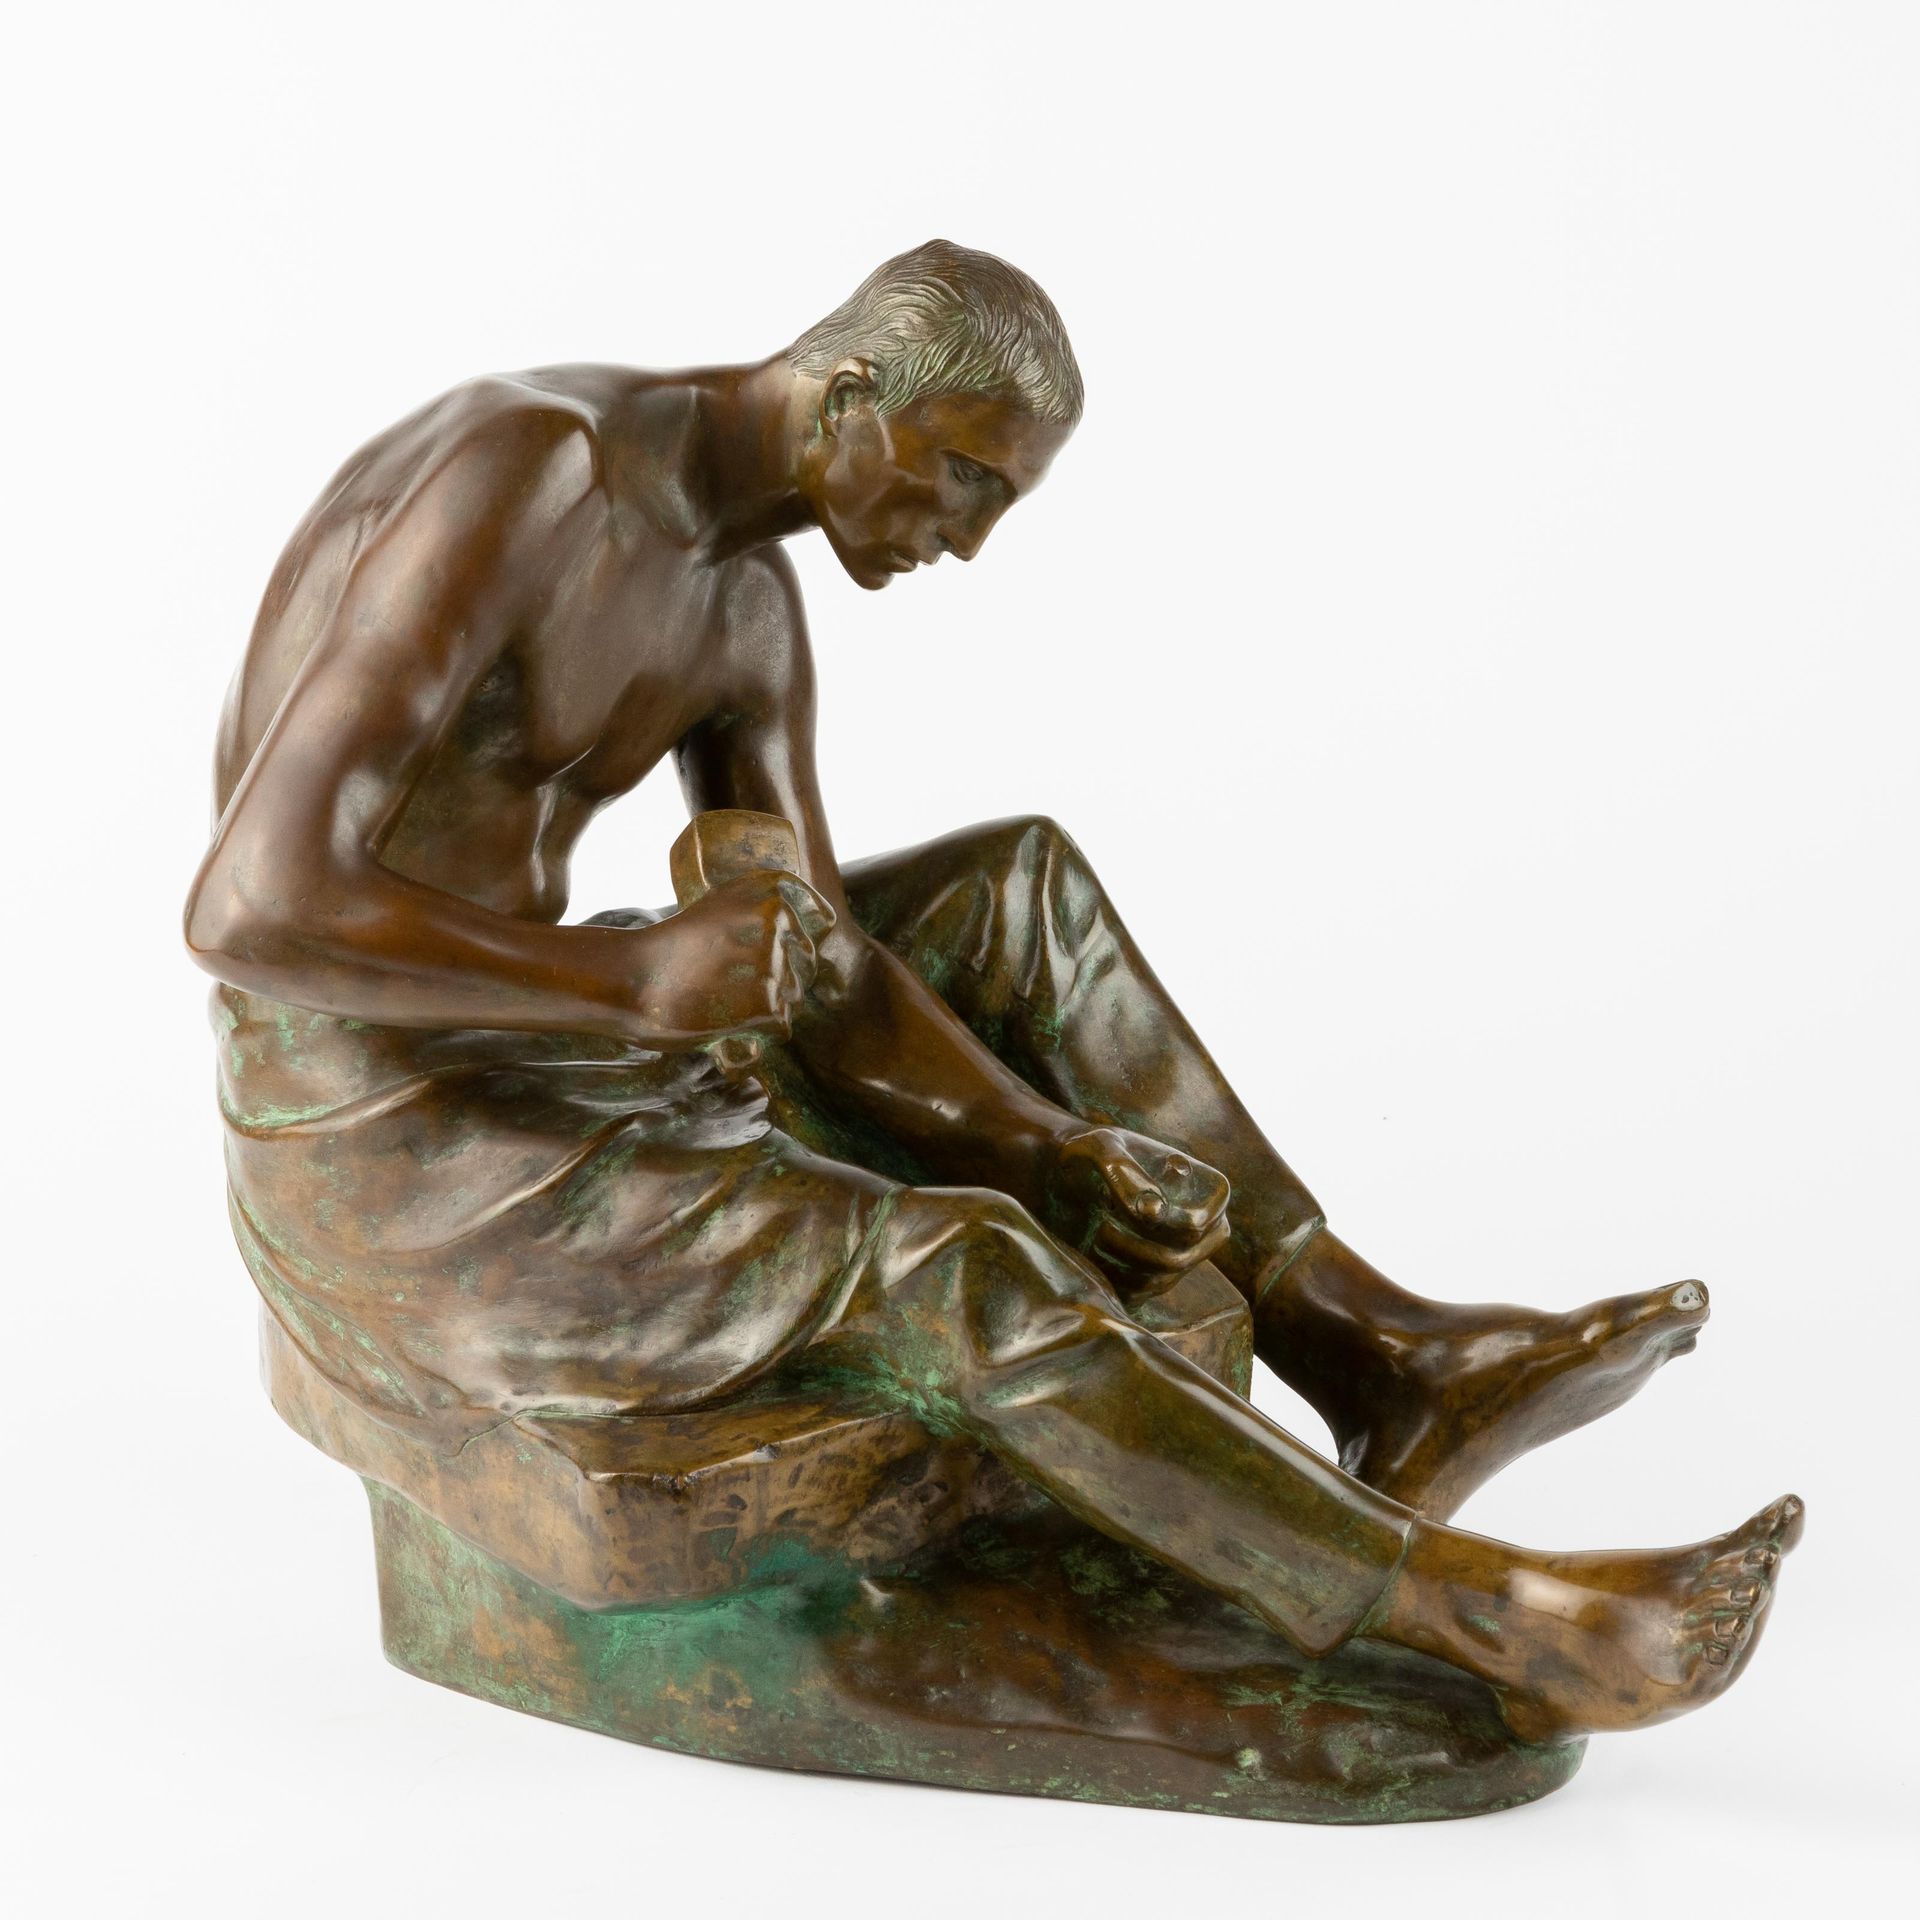 Constantin MEUNIER (1831-1905) Steinbildhauerei.

Bronze, hellbraune Patina.

Un&hellip;